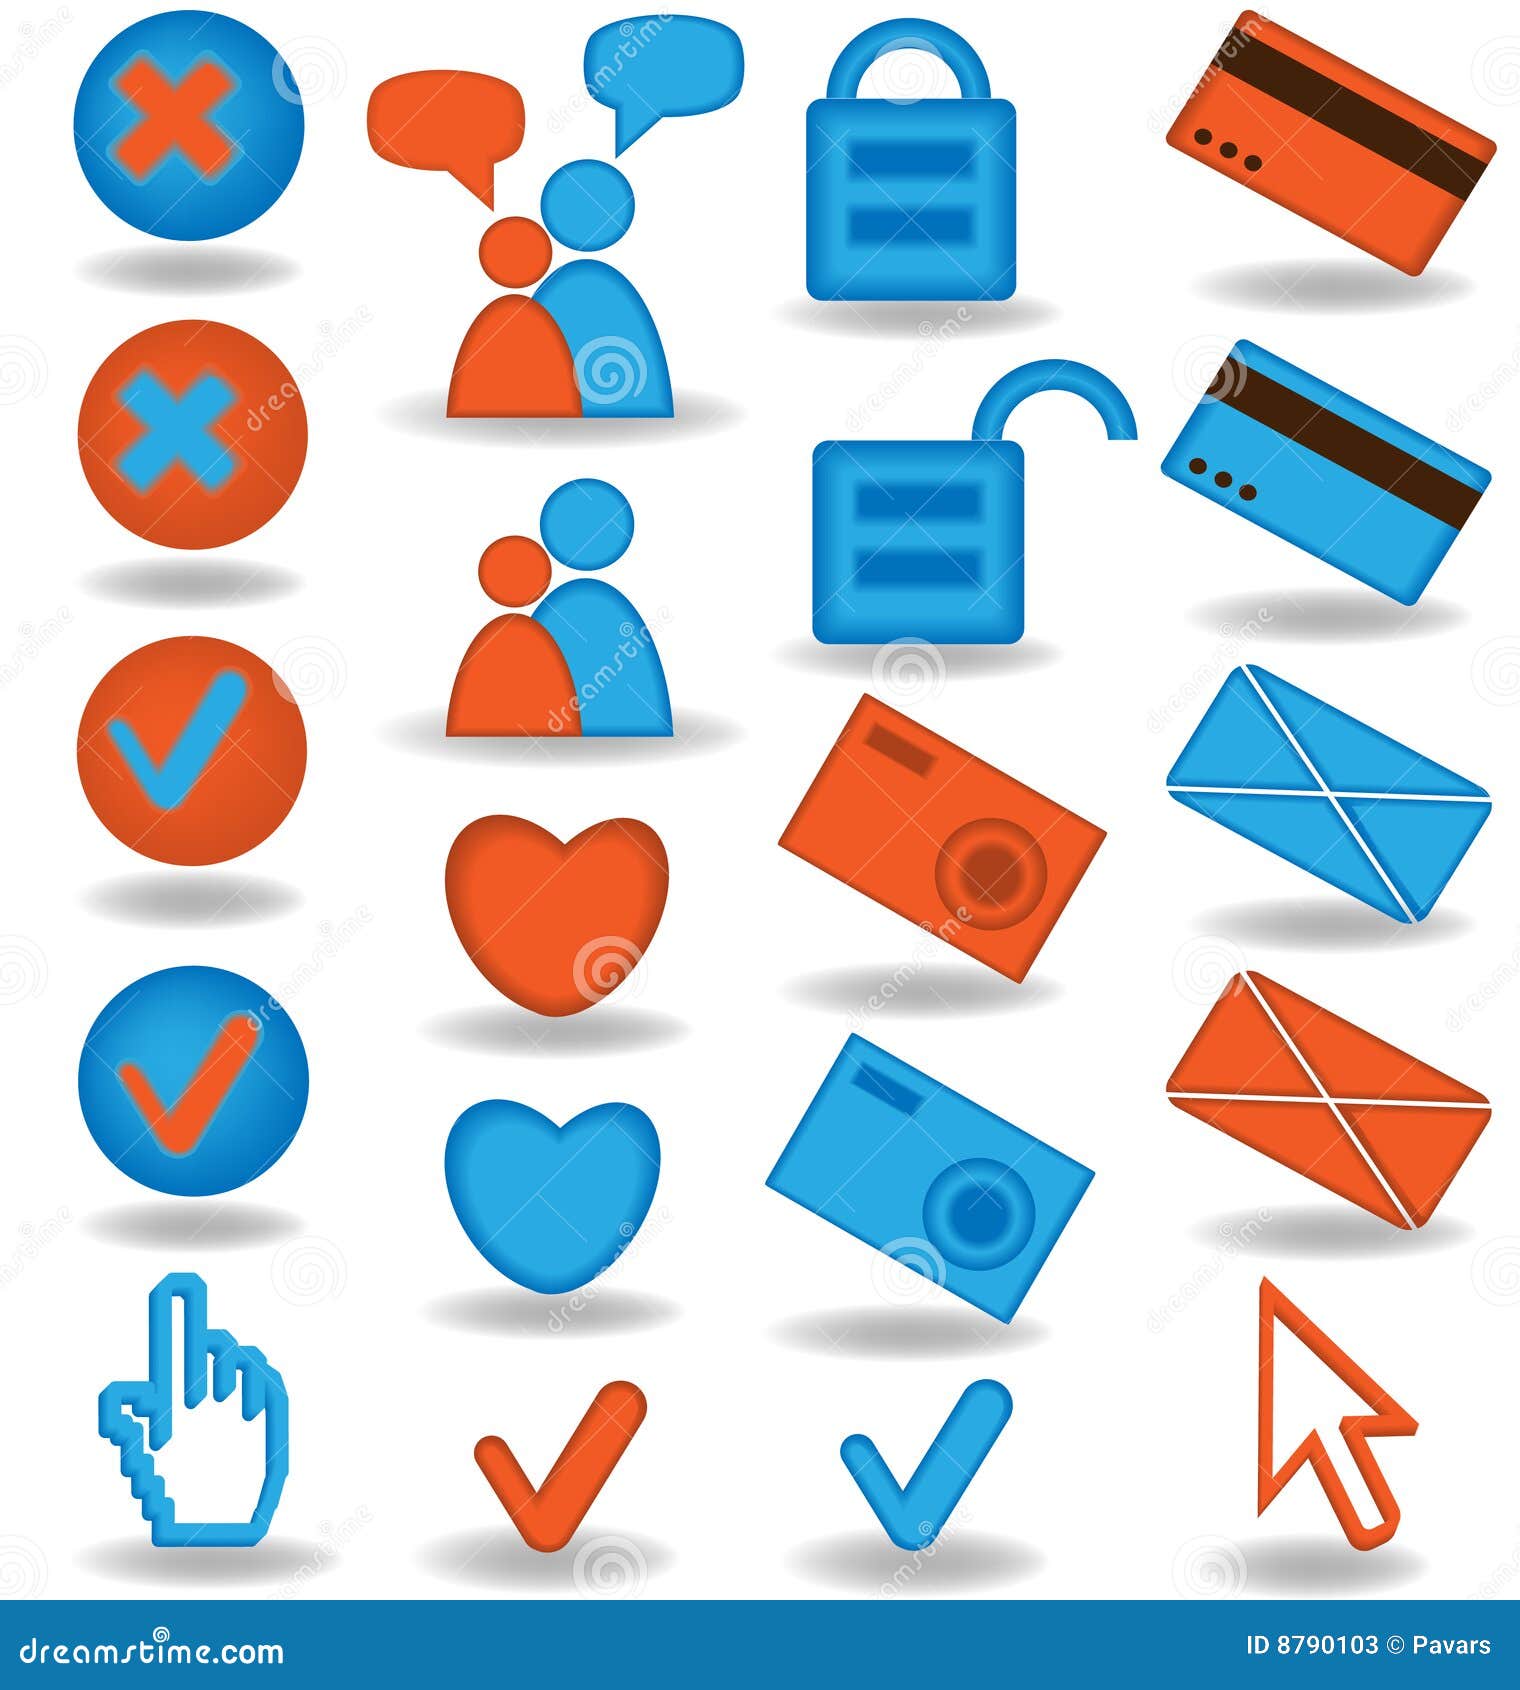 Blog icons set 2 stock vector. Illustration of commerce - 8790103